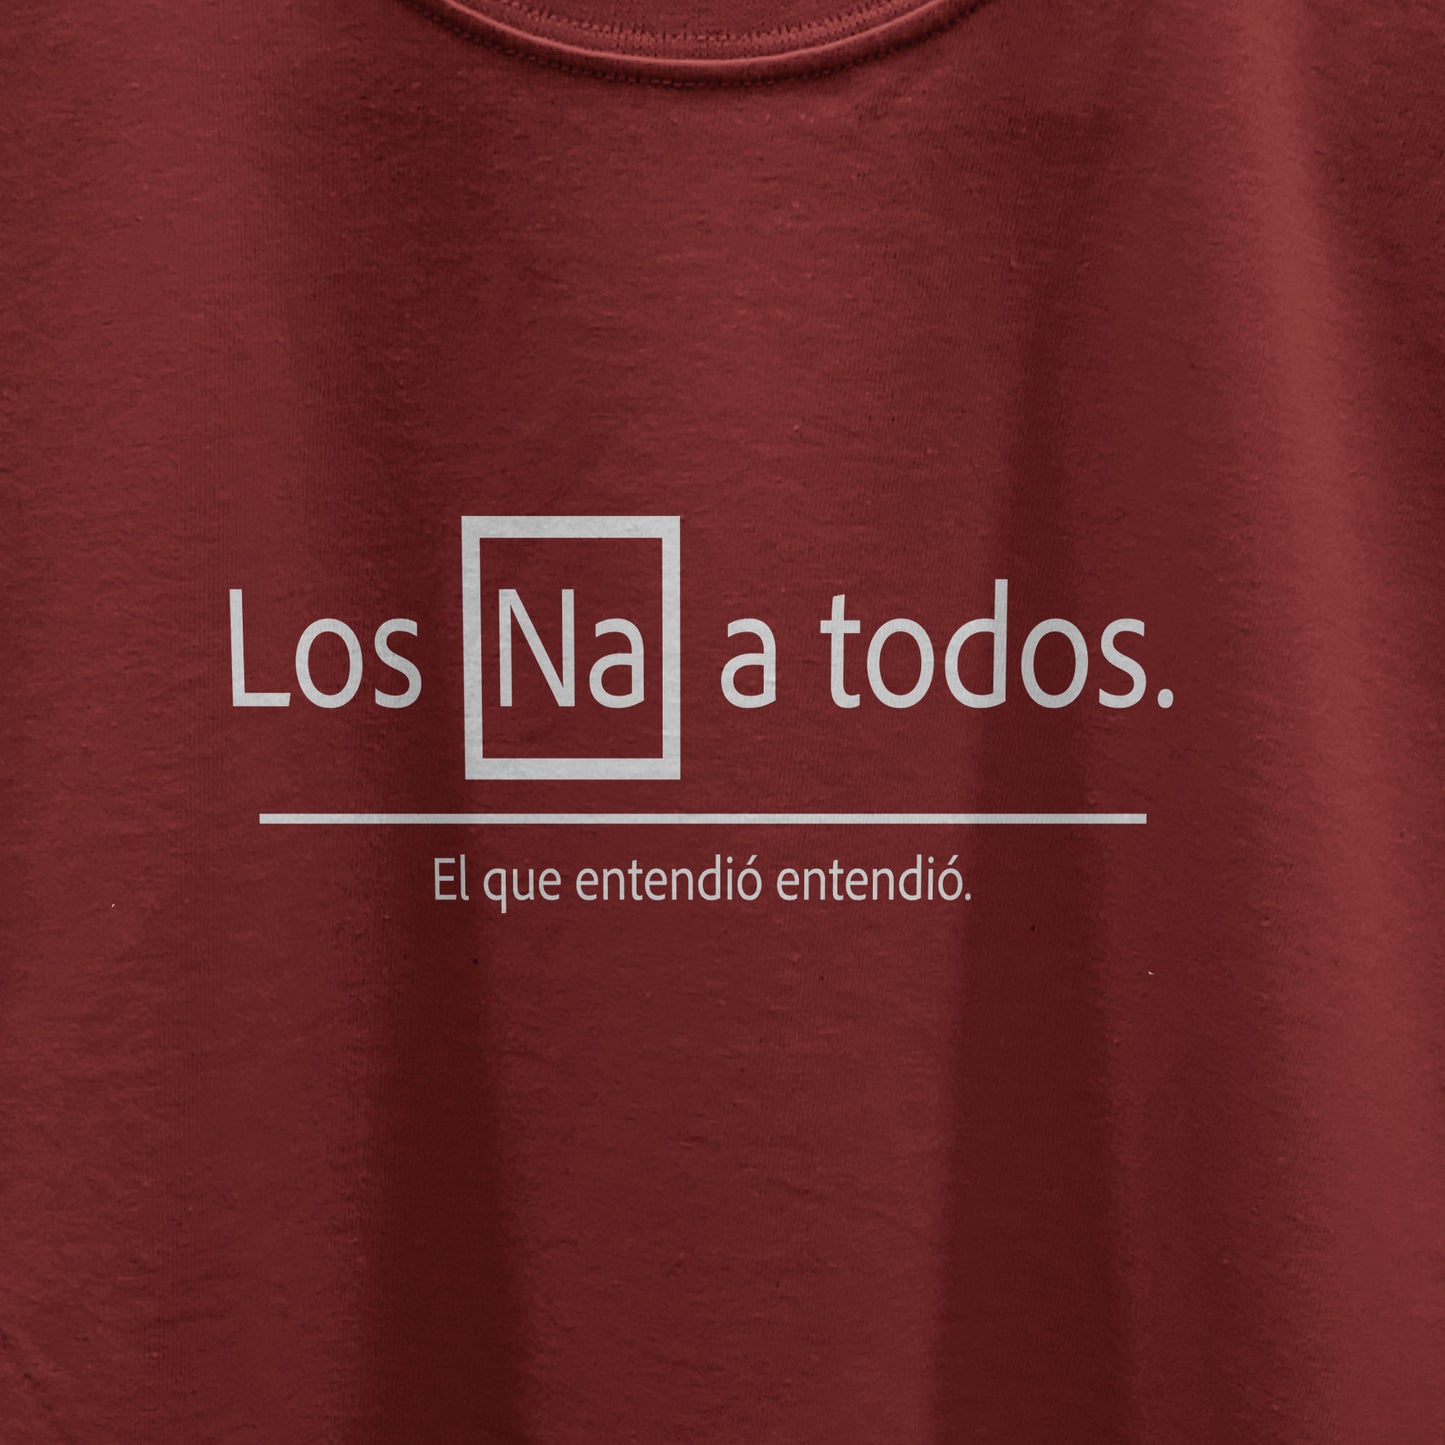 Camiseta "LosNaatodos" Hombre - 54581